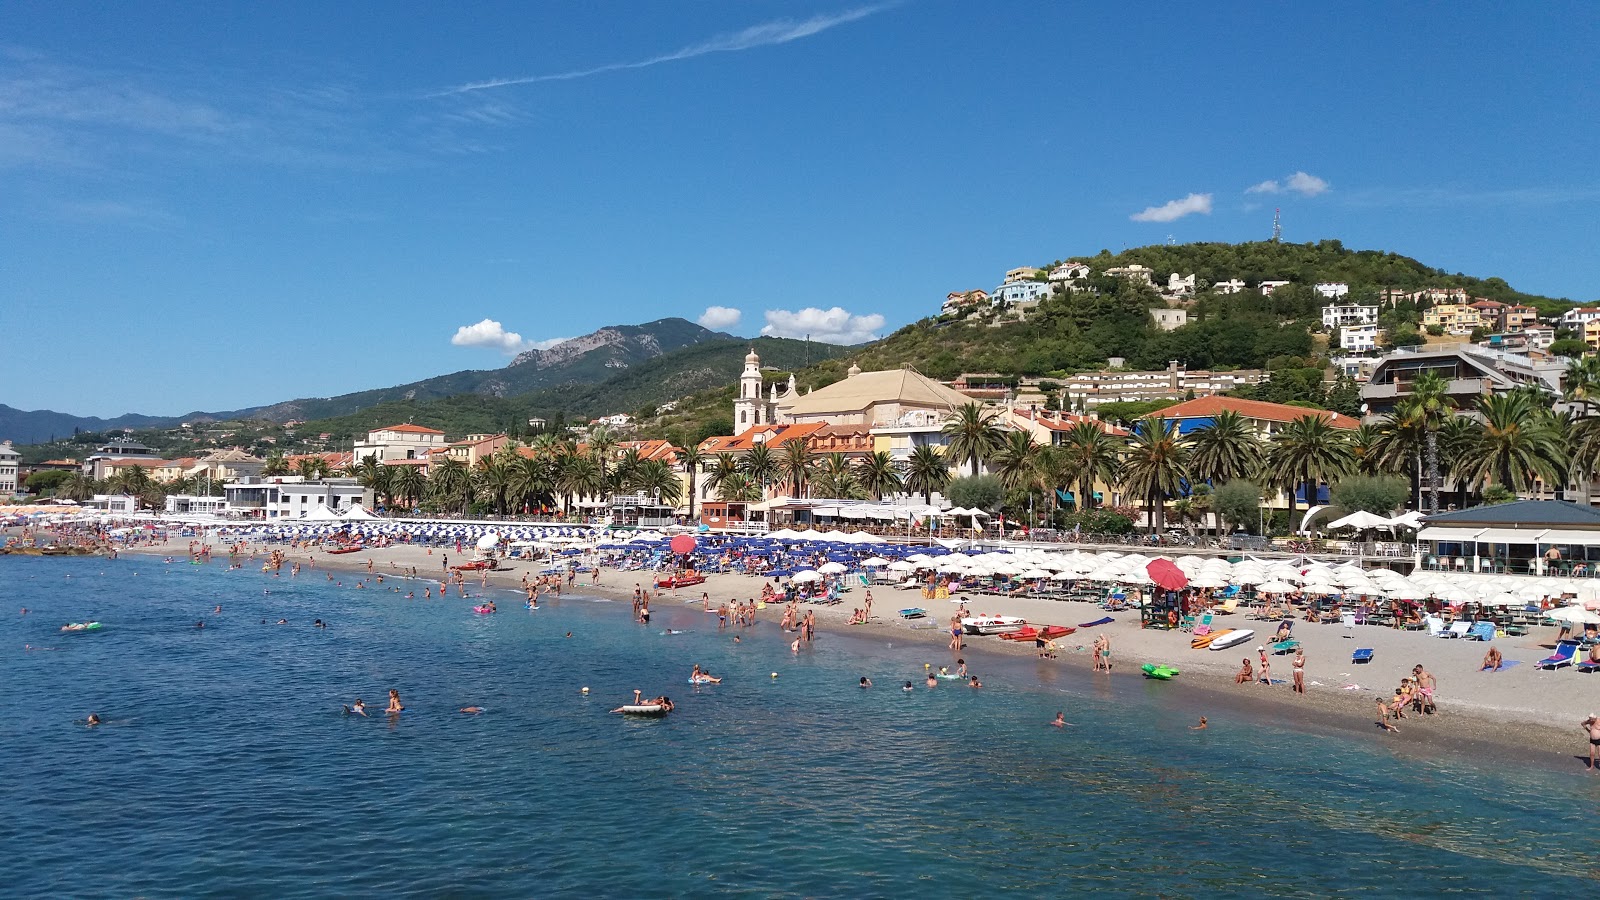 Spiaggia di Don Giovanni Bado'in fotoğrafı geniş plaj ile birlikte